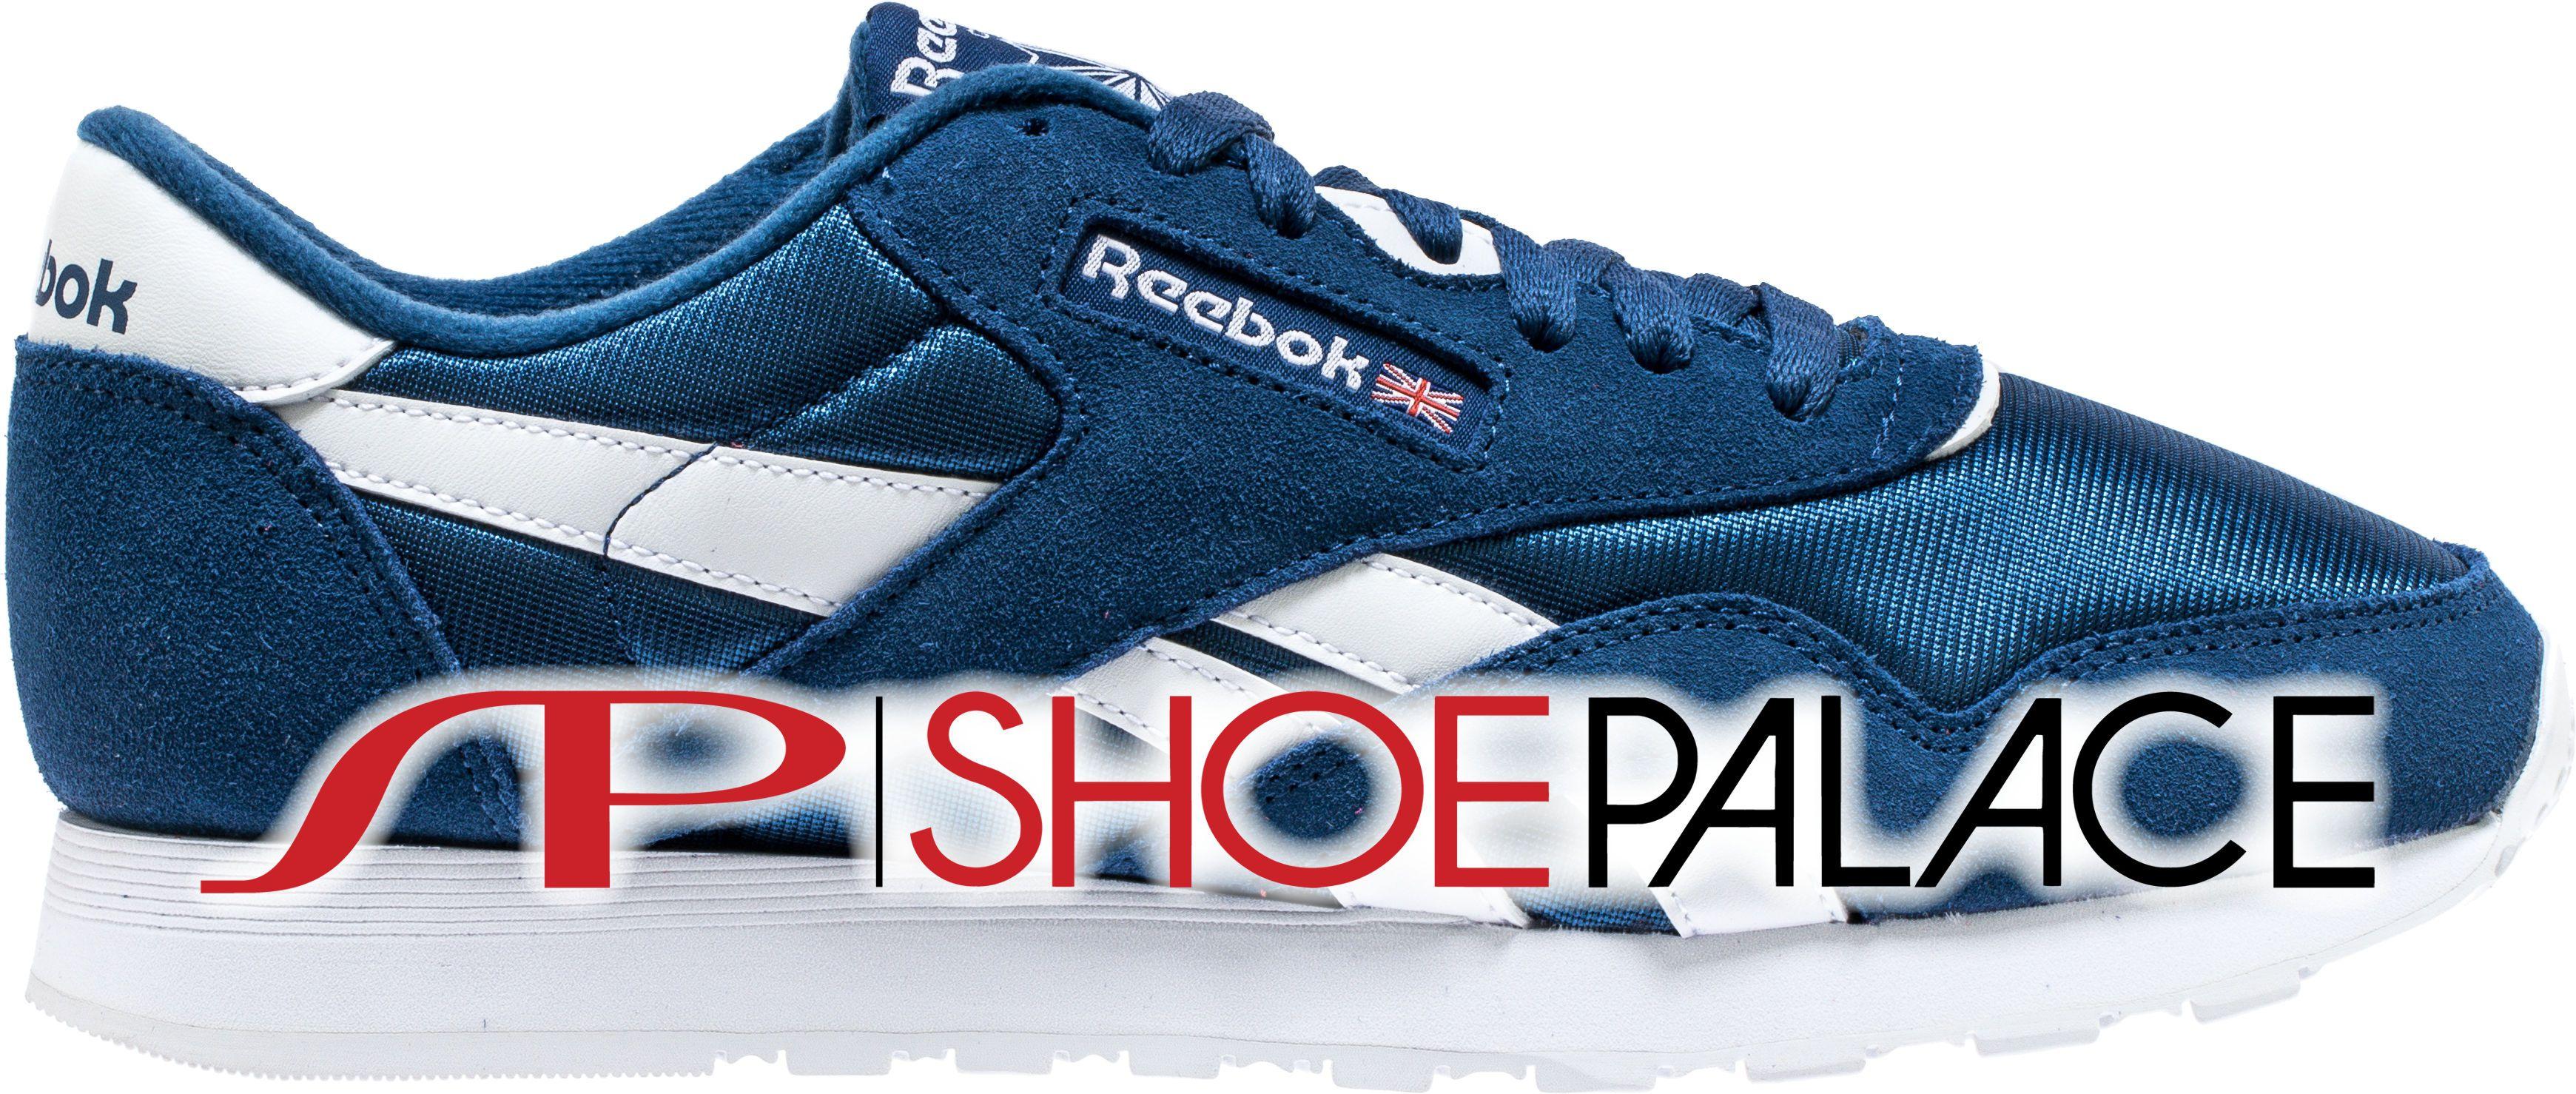 White and Blue Shoe Brand Logo - Reebok CN3267 Classic Nylon Mens Lifestyle Shoe Bunker Blue White